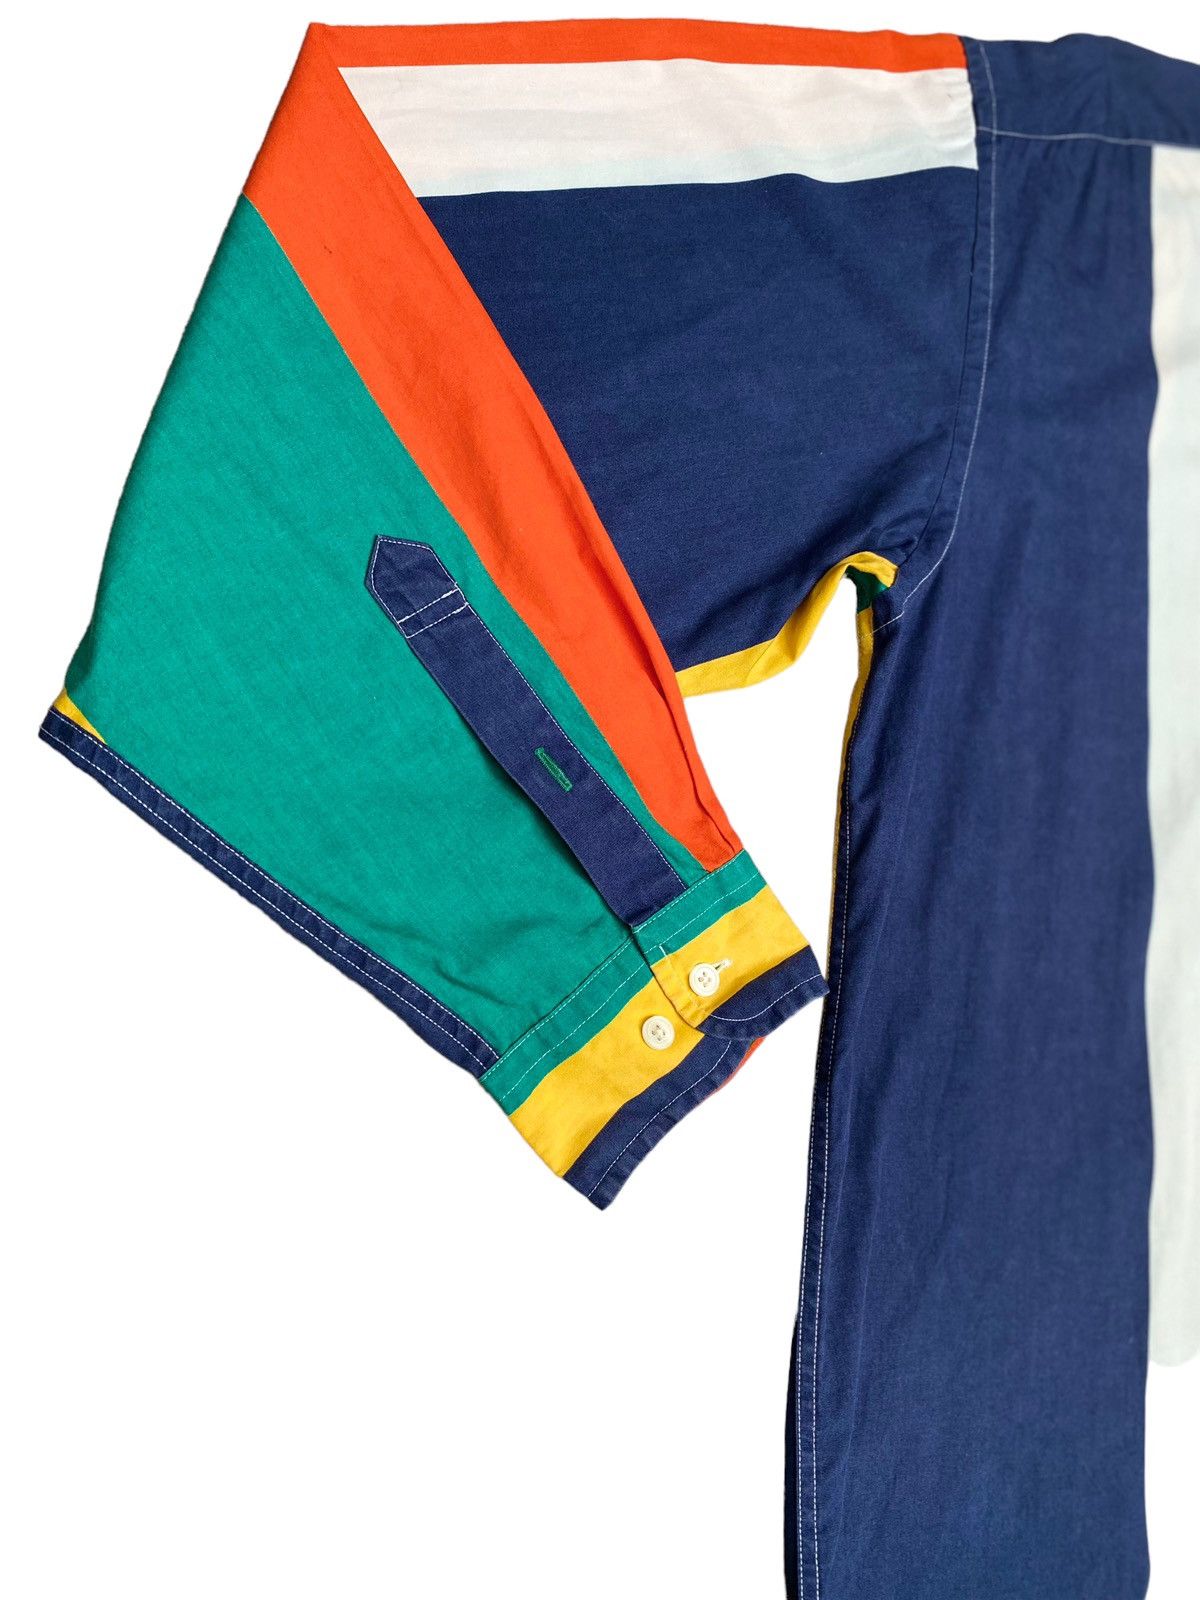 Vintage Rare Design Vintage Brand Tommy Hilfiger Stripe Shirt 1990s Size US L / EU 52-54 / 3 - 4 Thumbnail